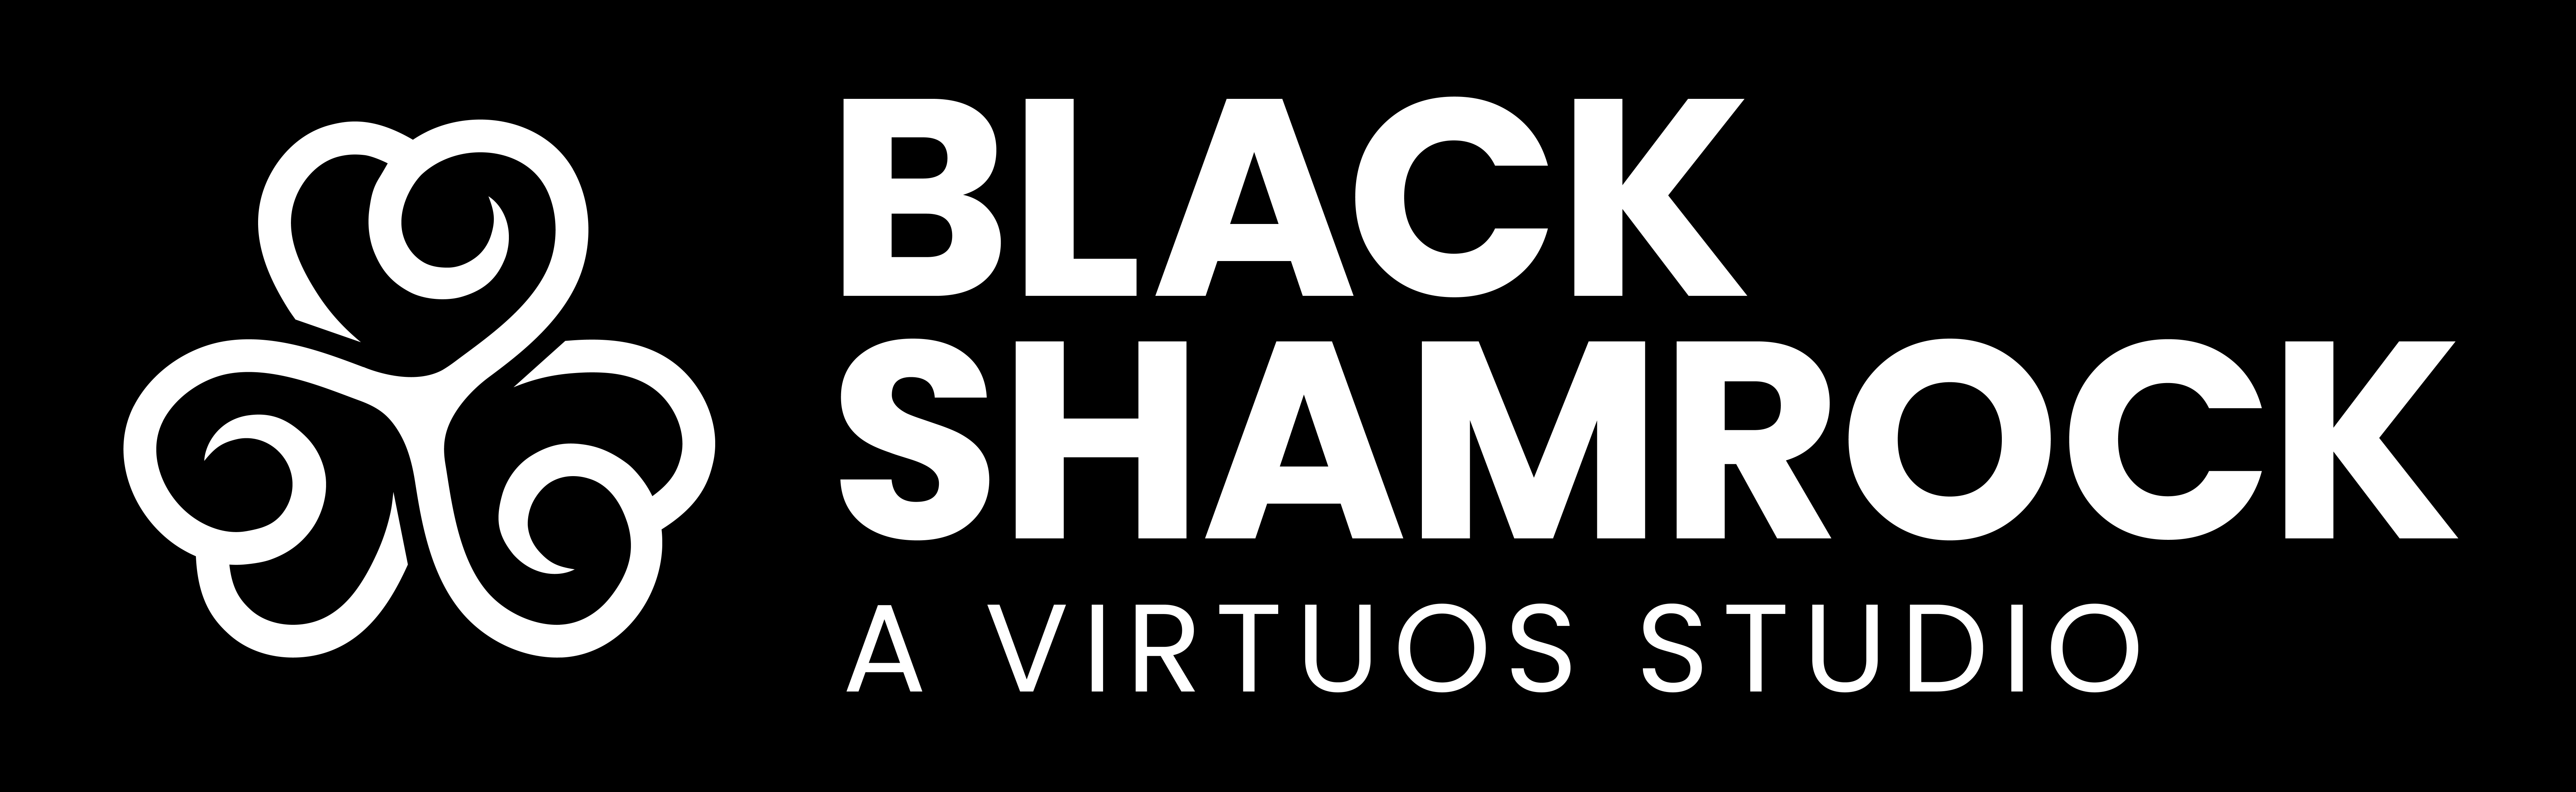 Black Shamrock - A Virtuos Studio 